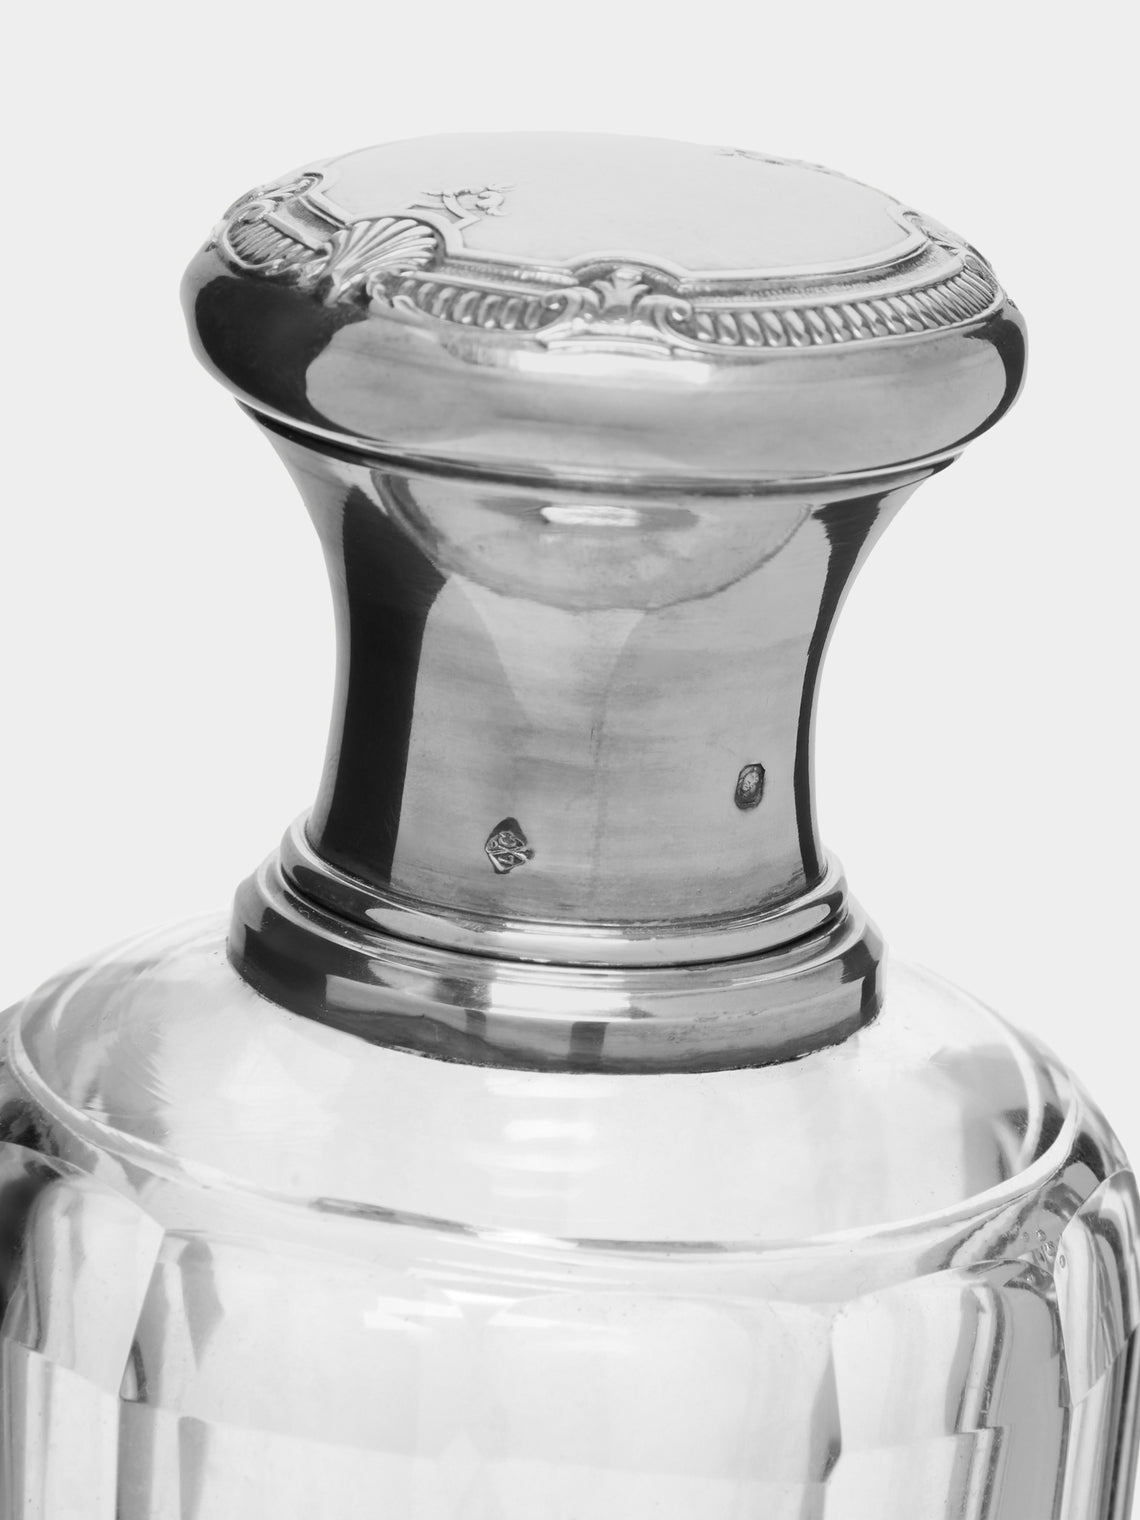 Antique and Vintage - 1890s Sterling Silver and Crystal Vanity Jars (Set of 6) -  - ABASK